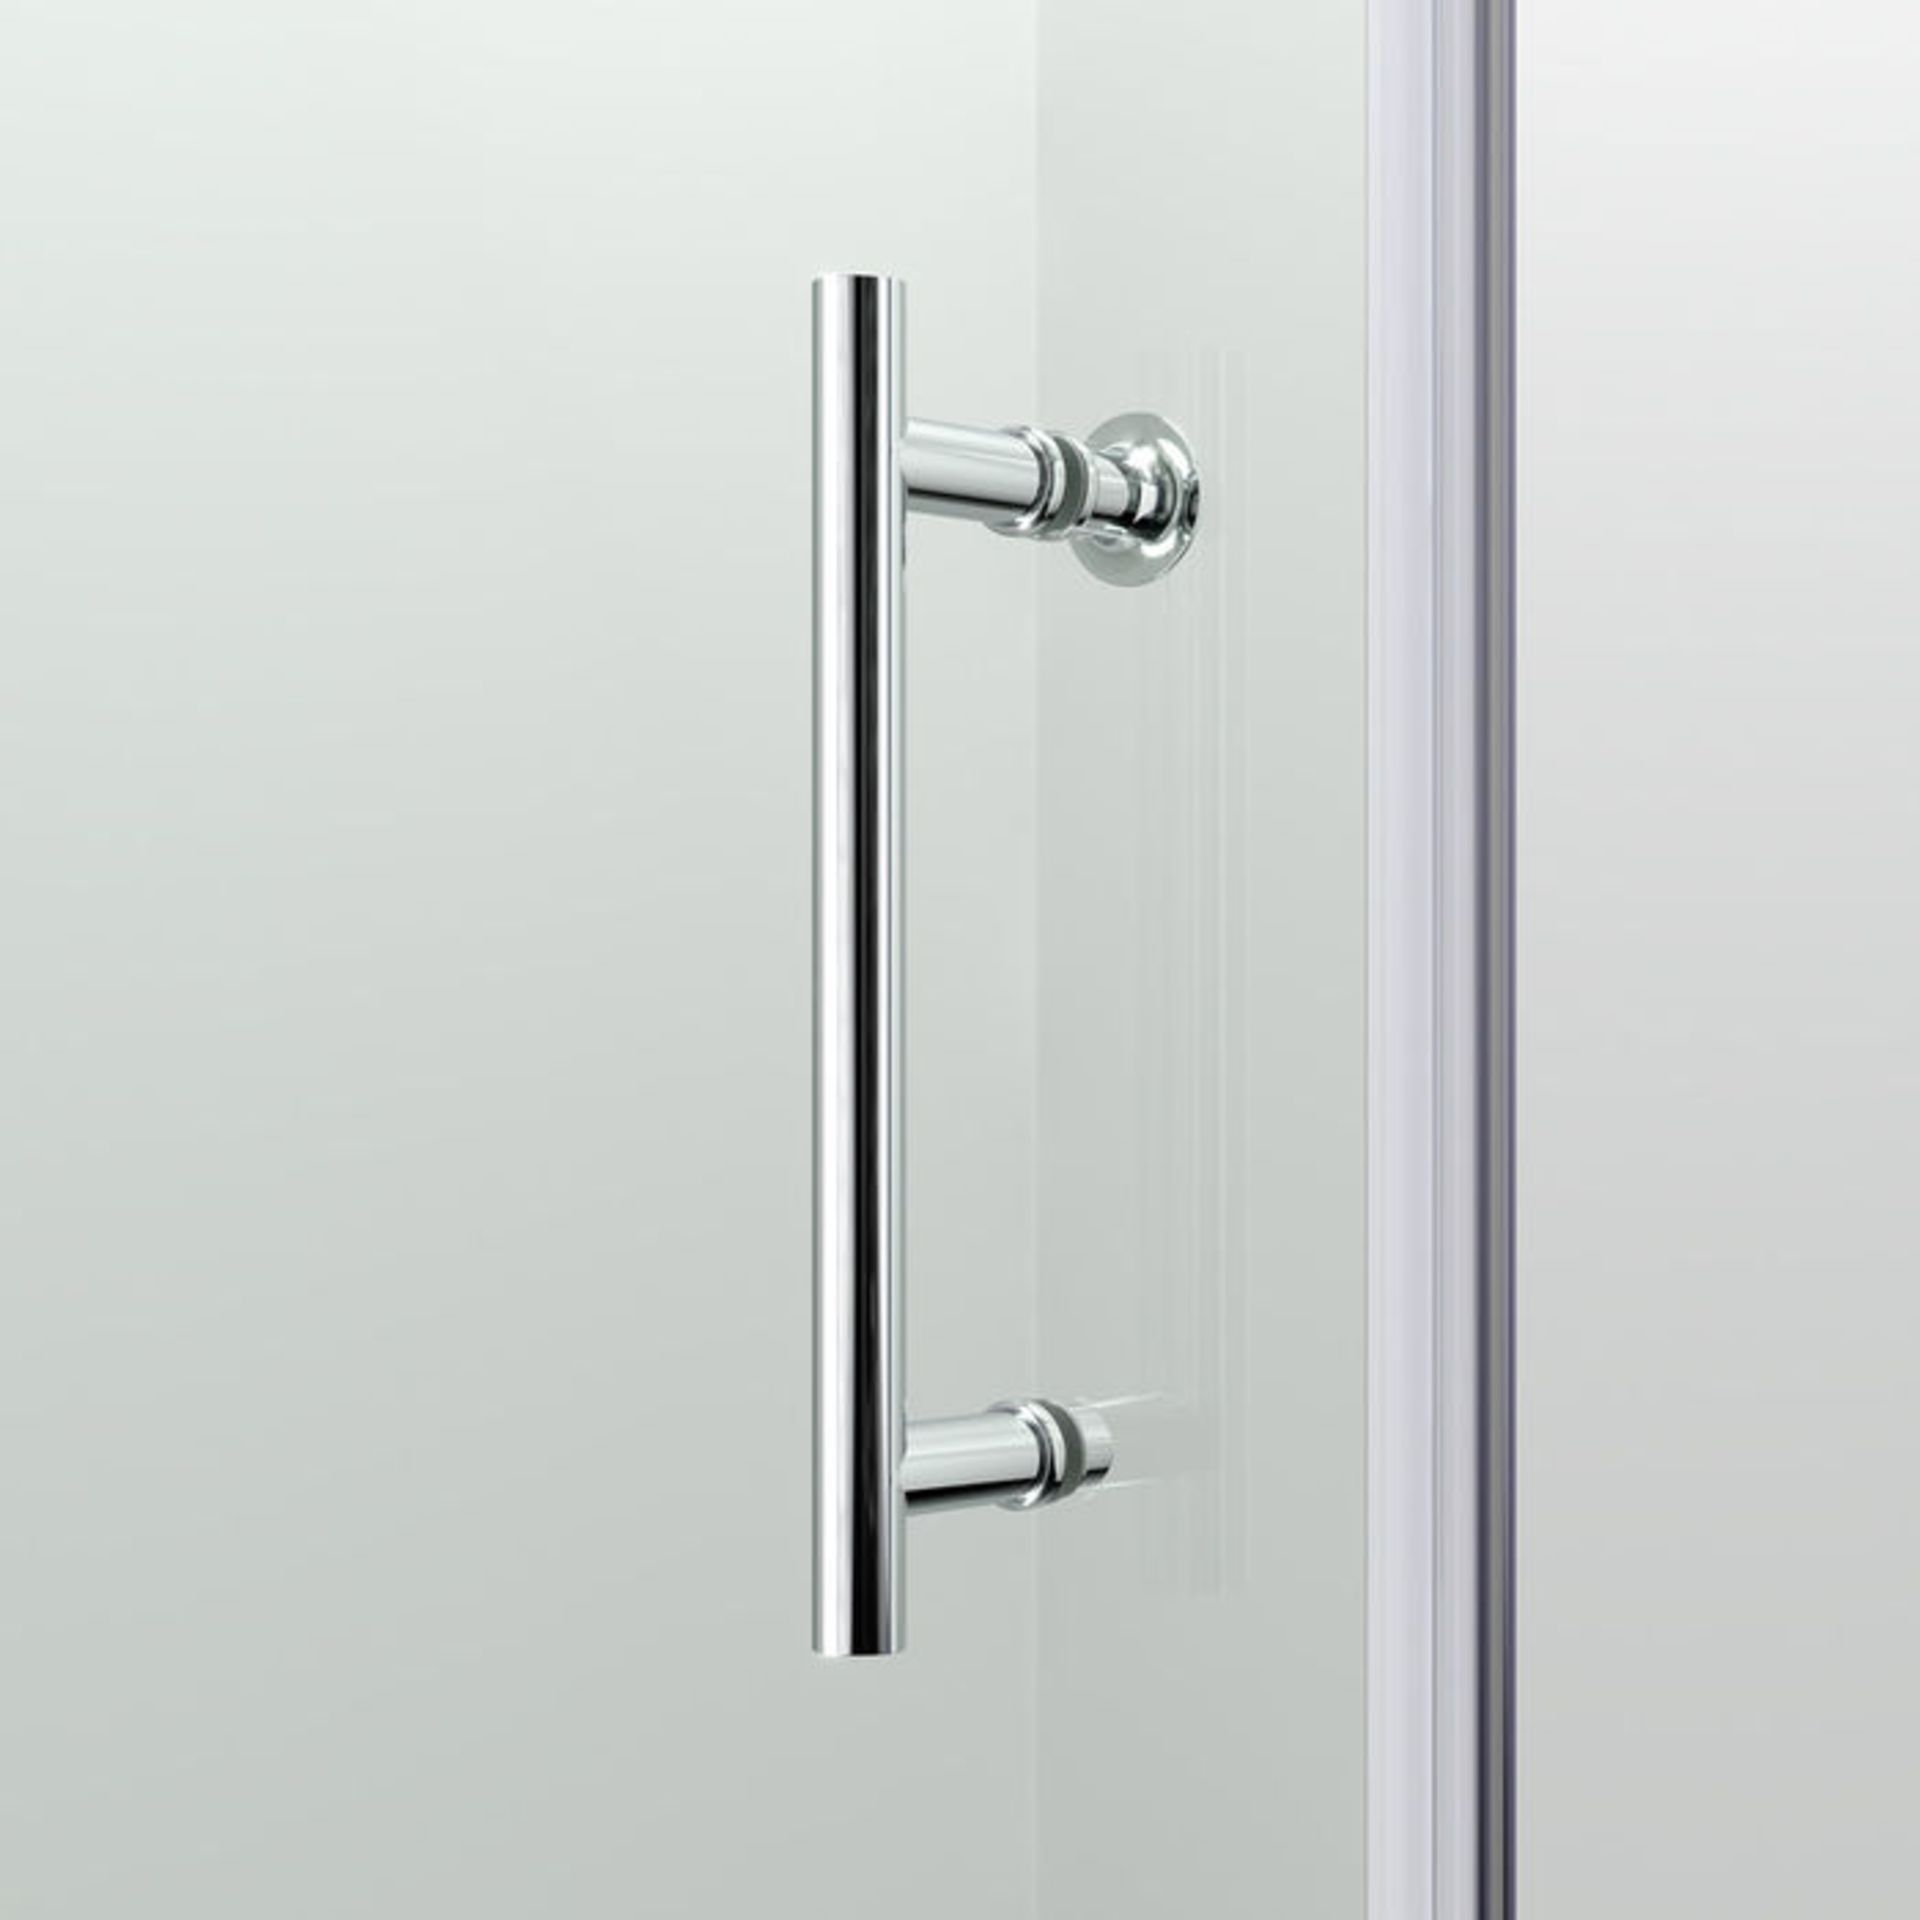 (S125) 1200x760mm - 6mm - Elements Sliding Door Shower Enclosure RRP £499.99 6mm Safety Glass - Image 6 of 6